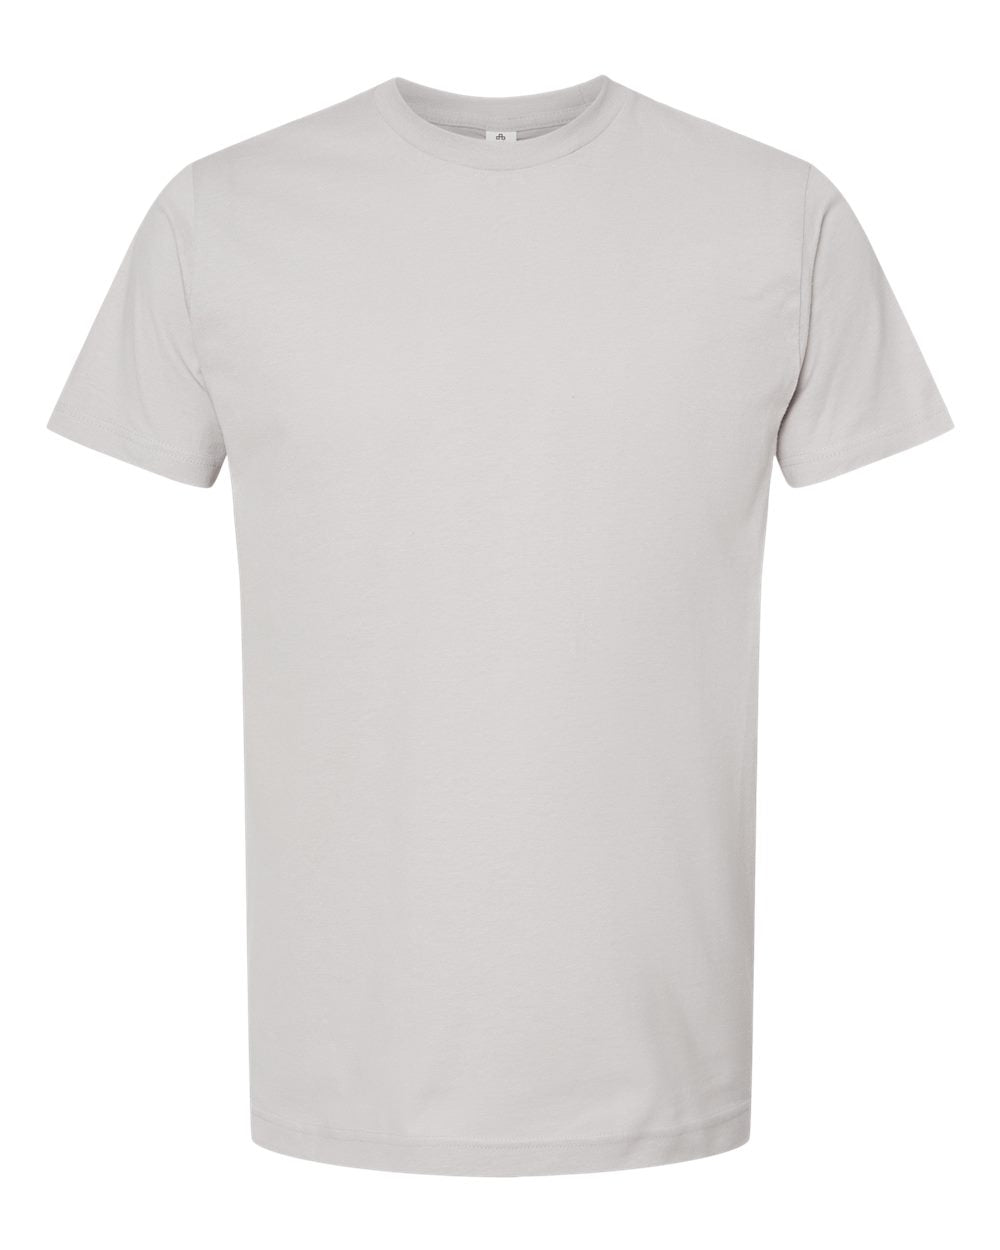 Pretreated Tultex 202 Unisex Fine Jersey T-Shirt - Silver